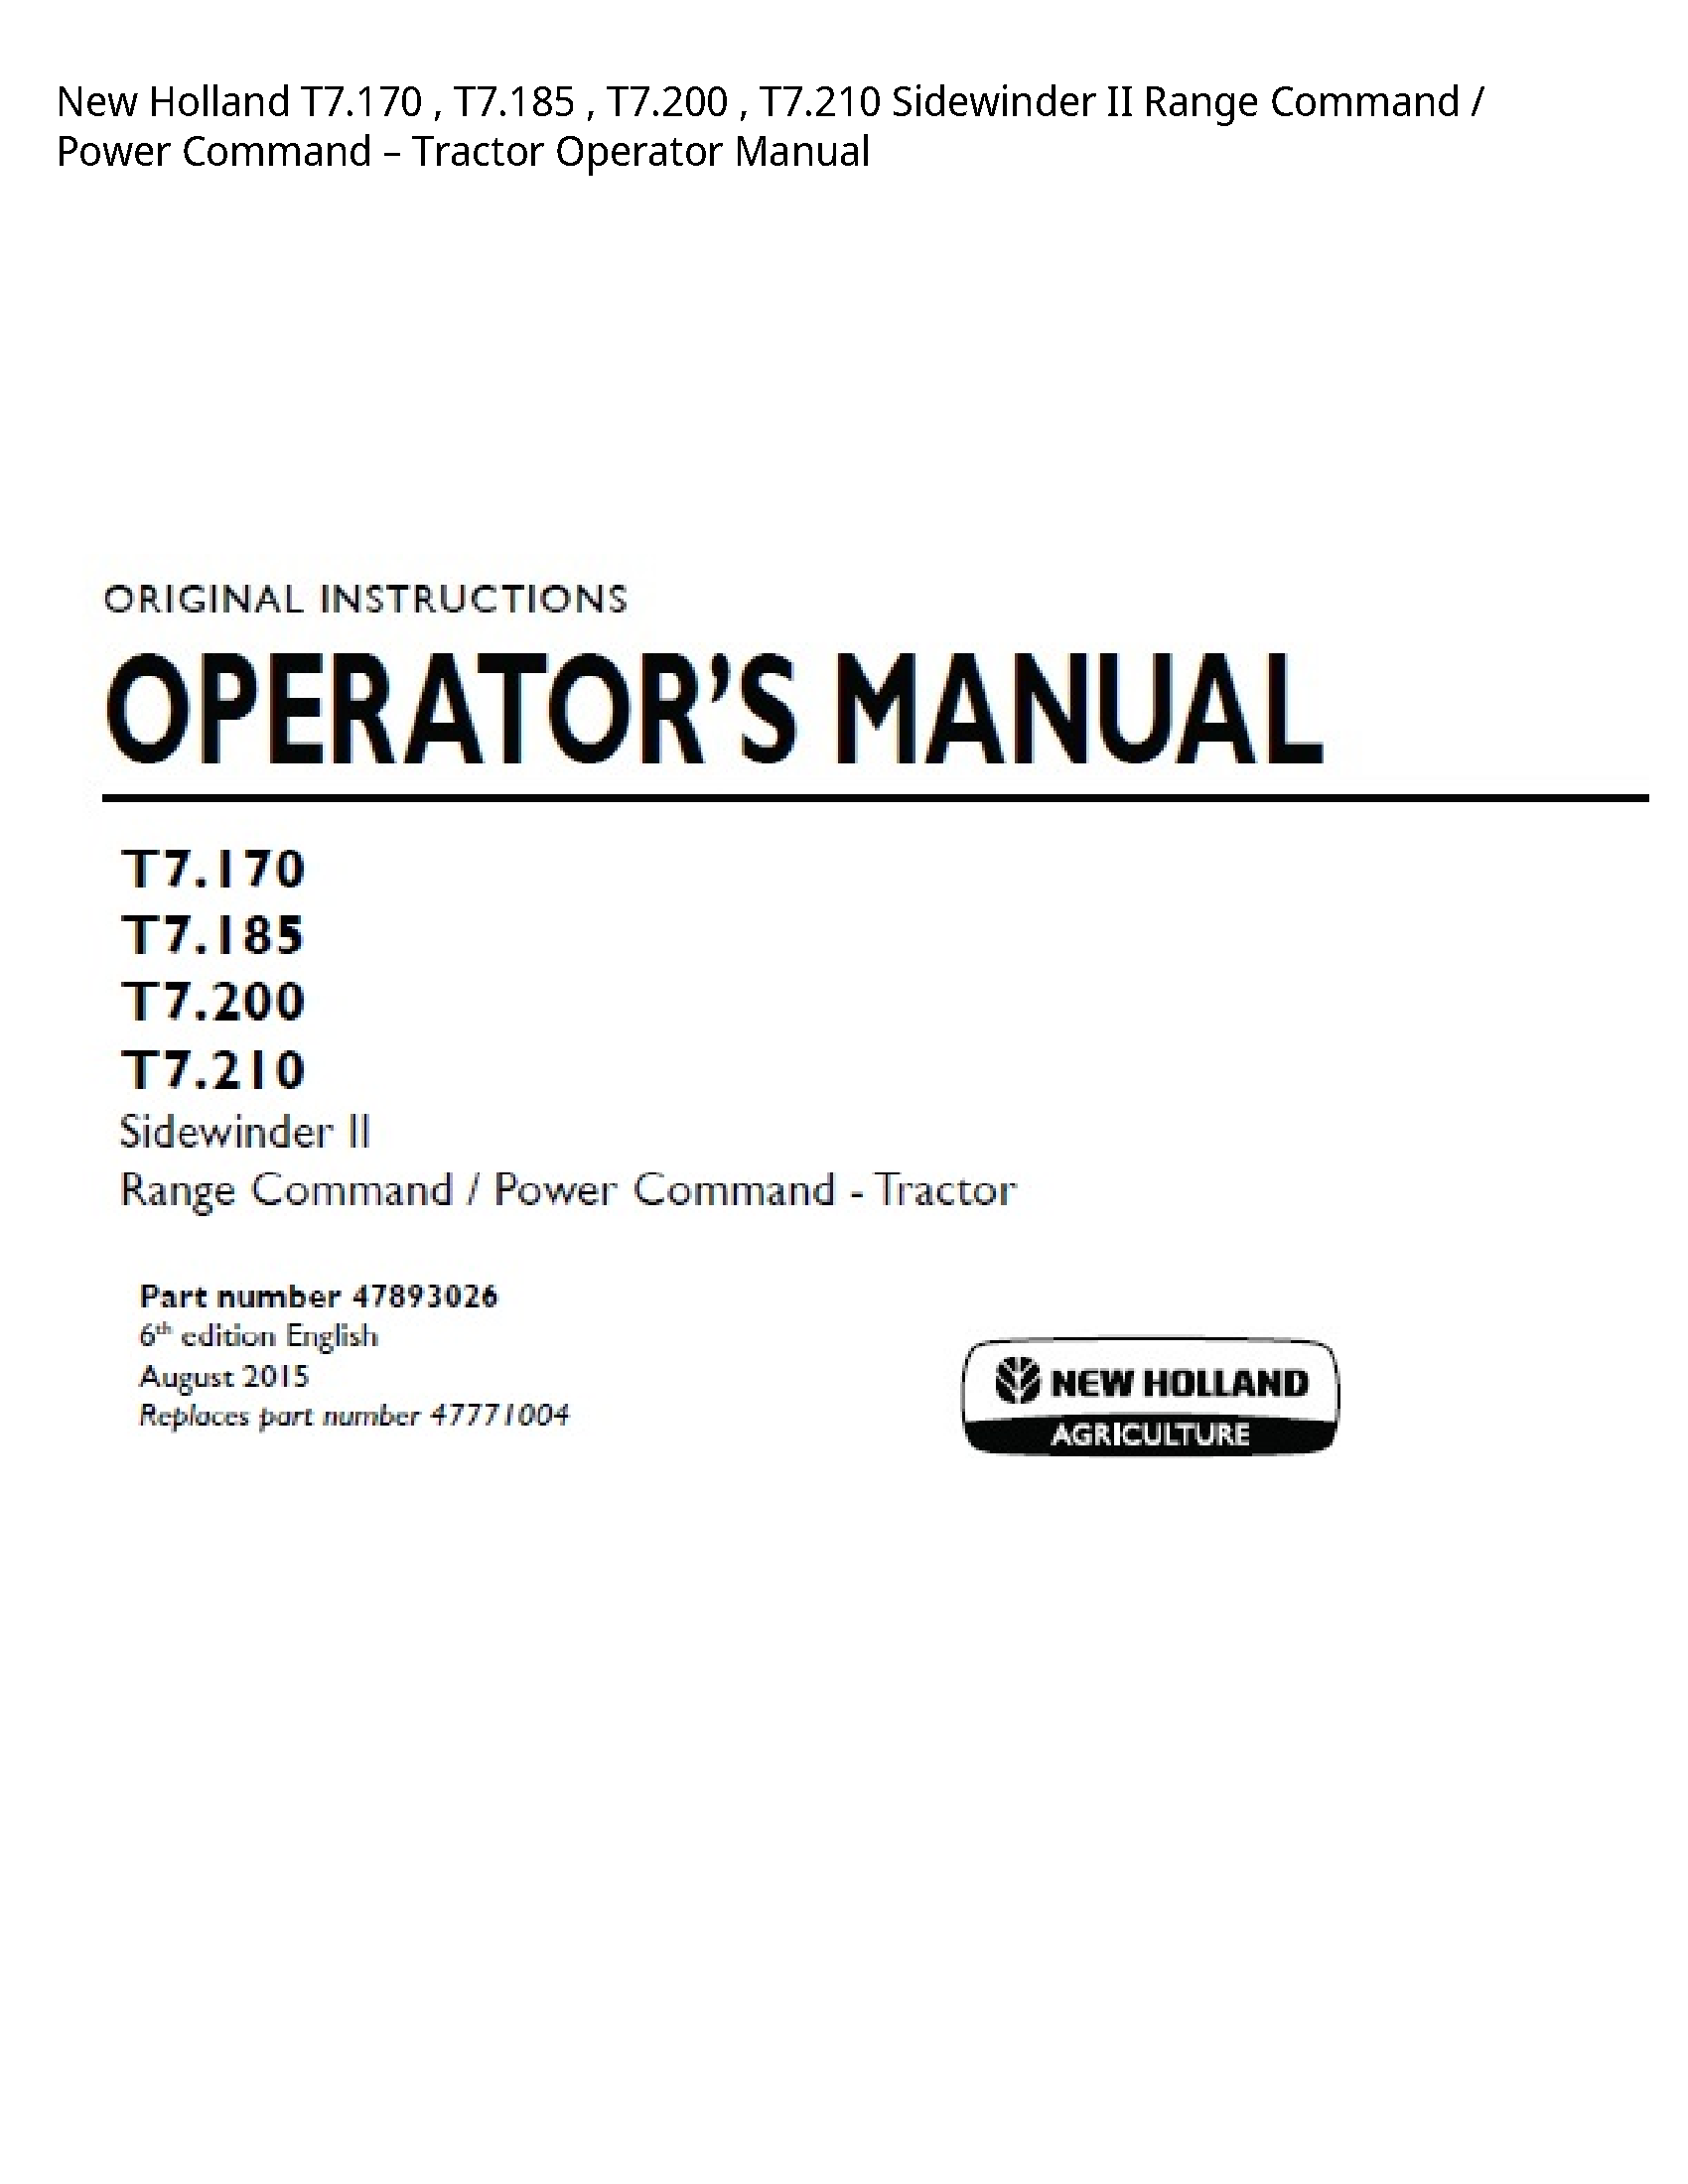 New Holland T7.170 Sidewinder II Range Command Power Command Tractor Operator manual